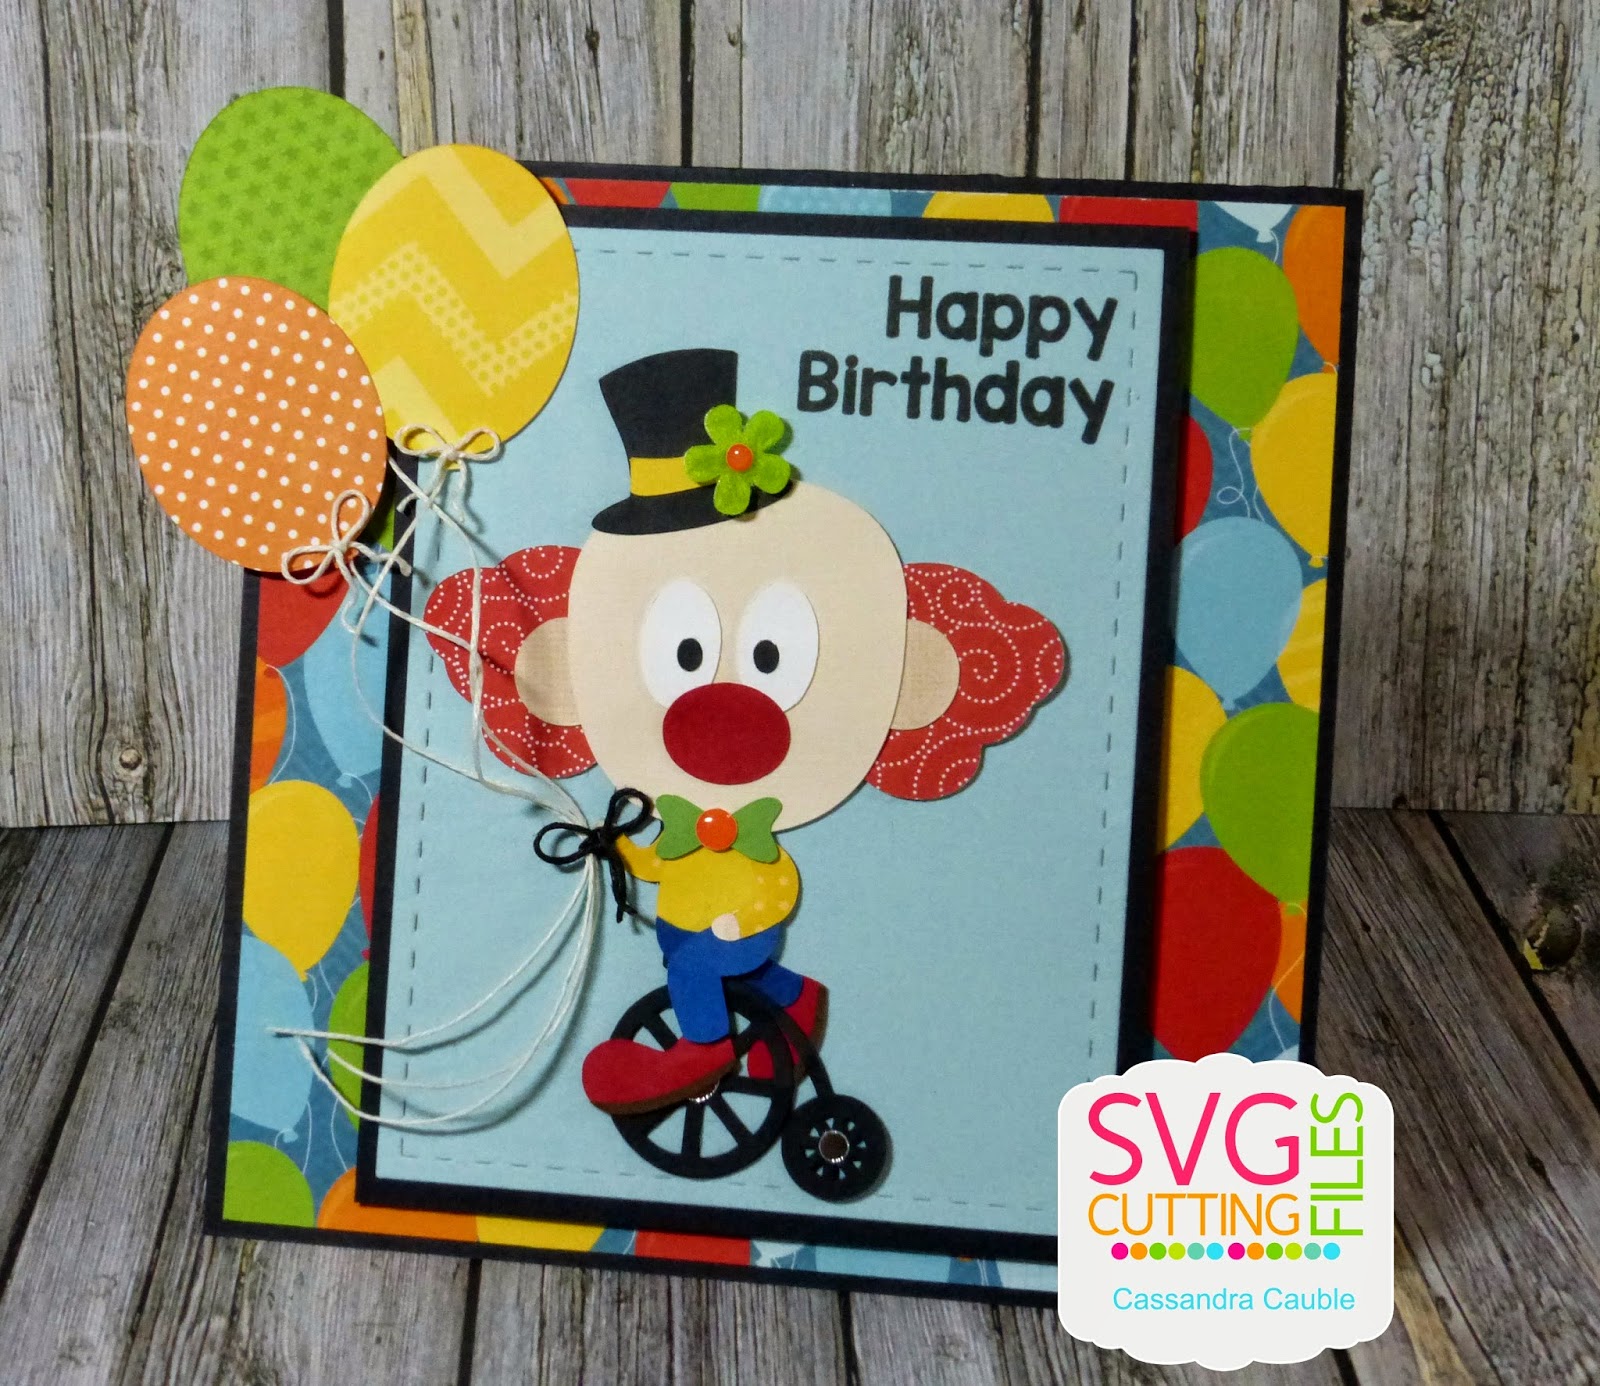 Download SVG Cutting Files: Happy Birthday